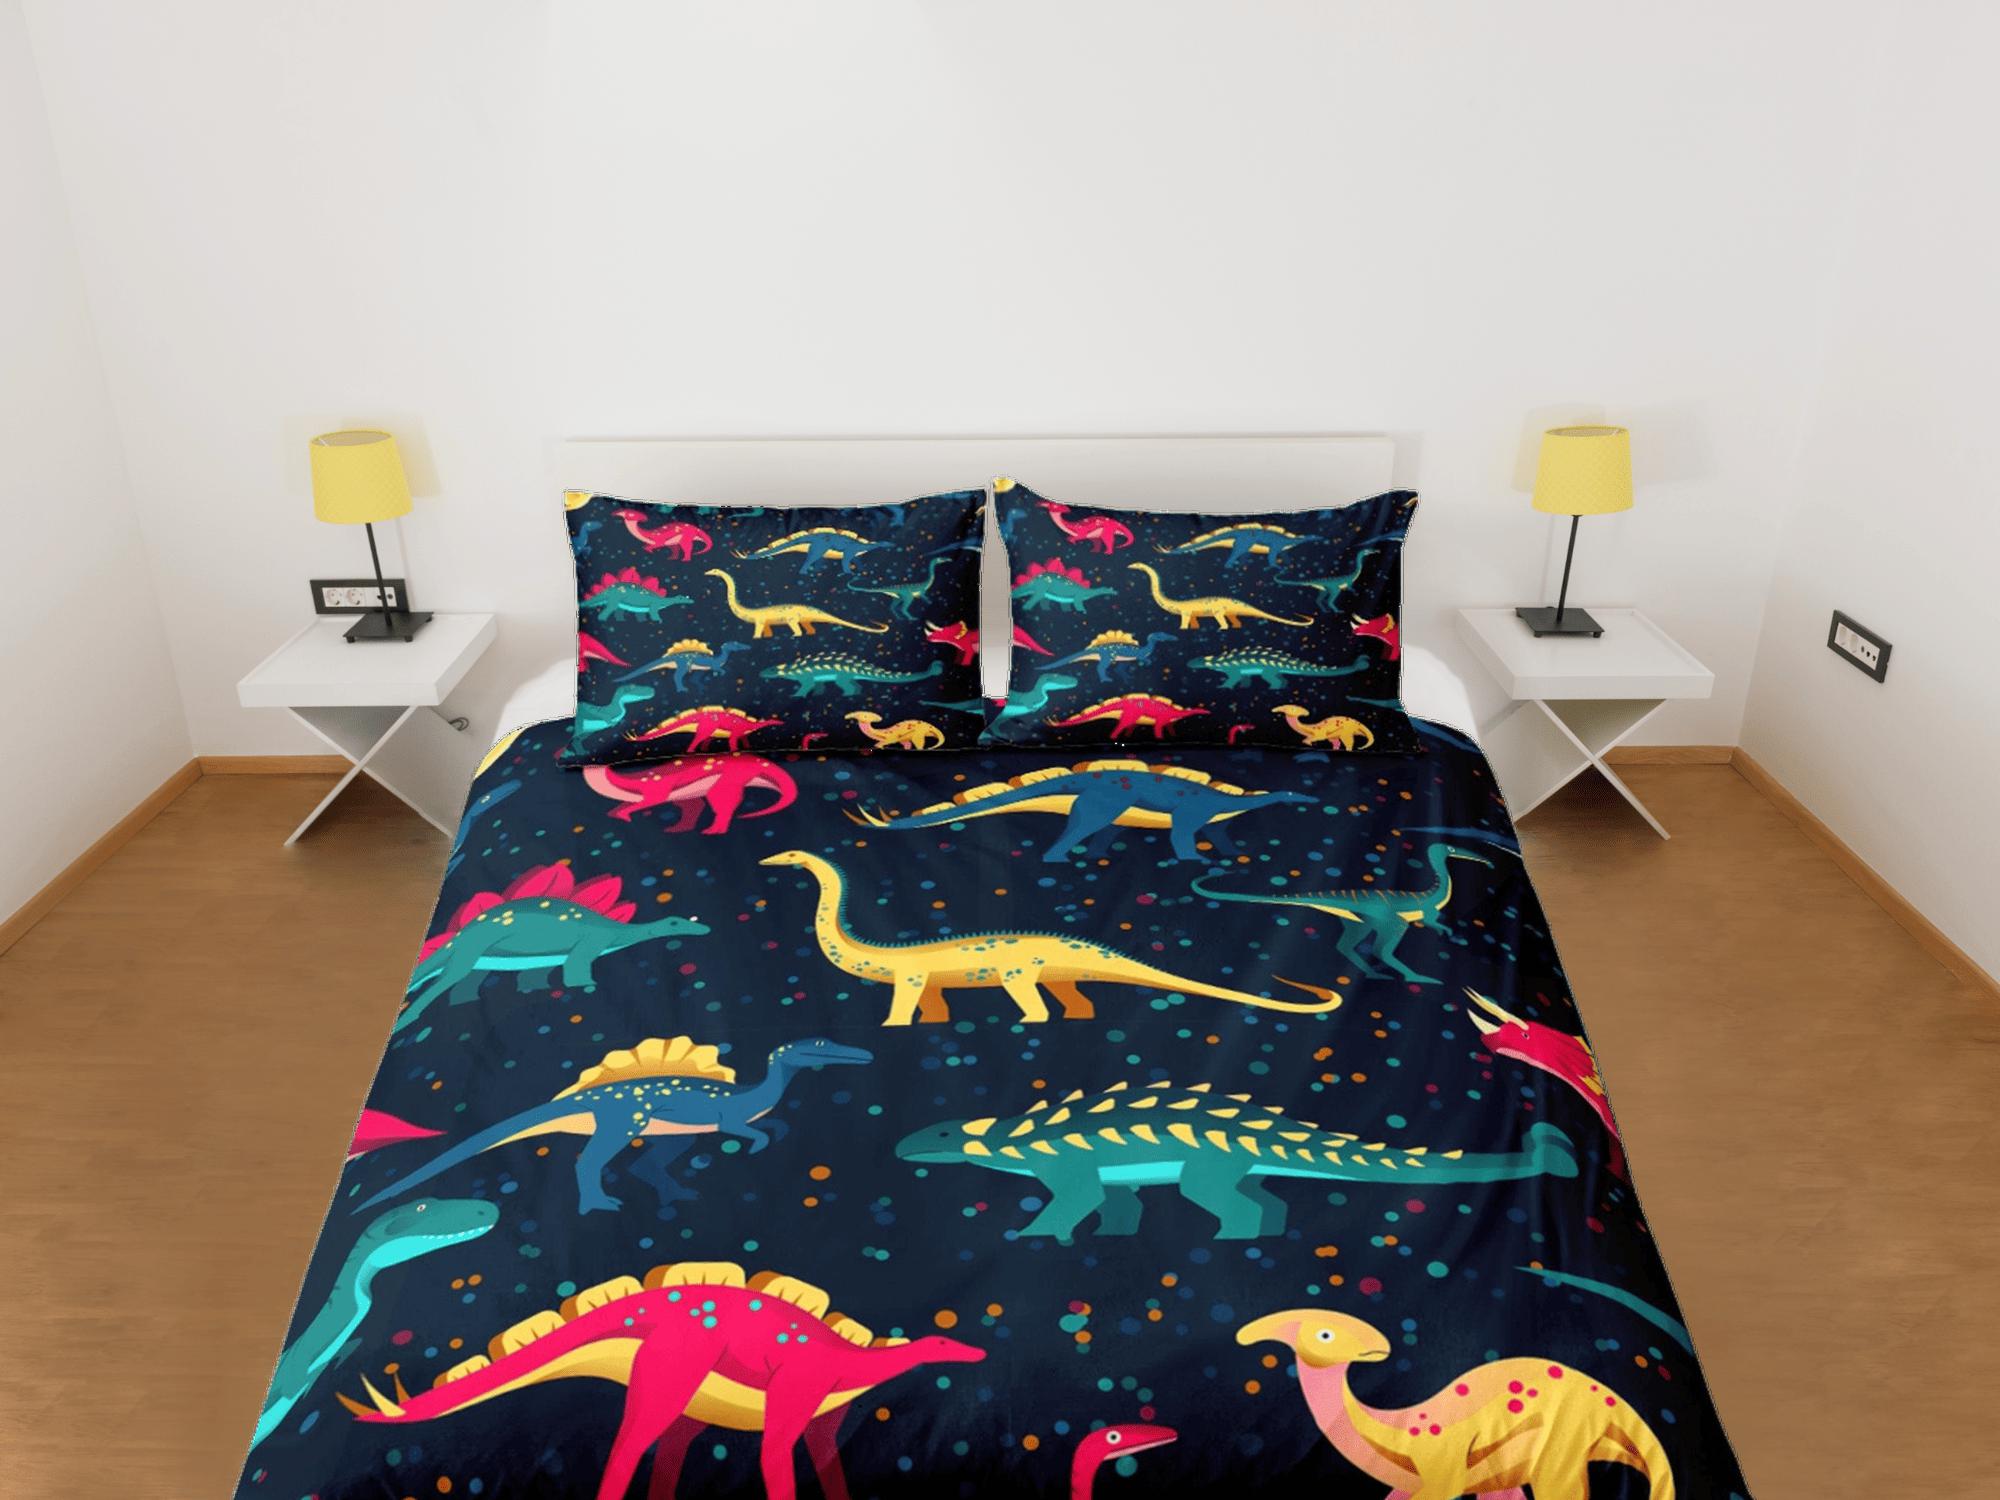 daintyduvet Dark blue dinosaur bedding, kids bedding full, cute duvet cover set, dinosaur nursery bed decor, colorful bedding, baby dinosaur, toddler